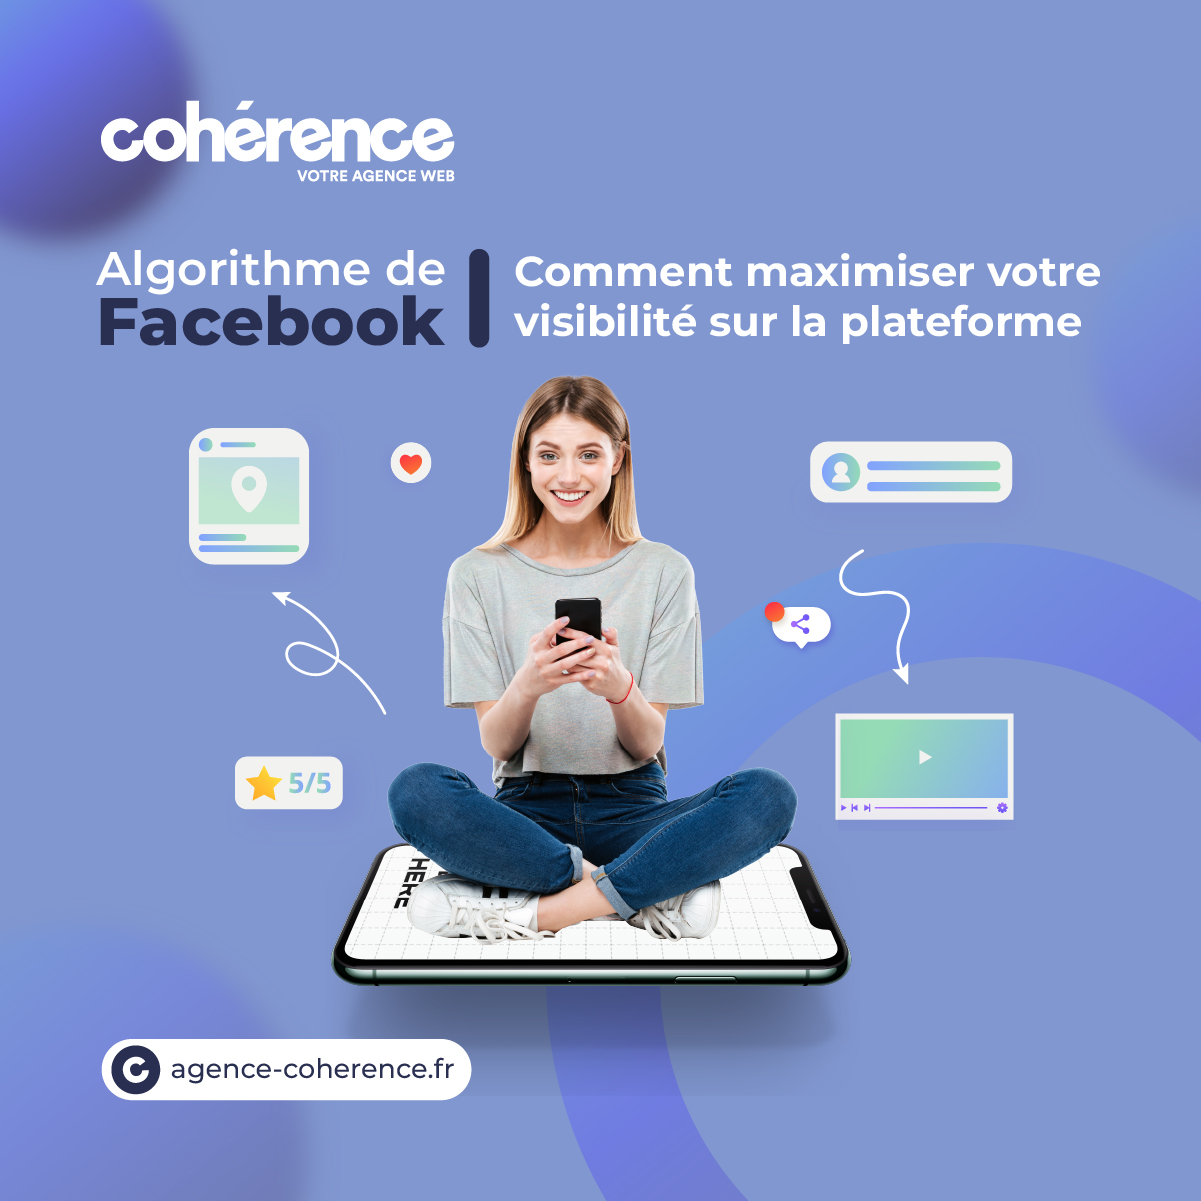 Coherence Agence Digitale Algorithme De Facebook